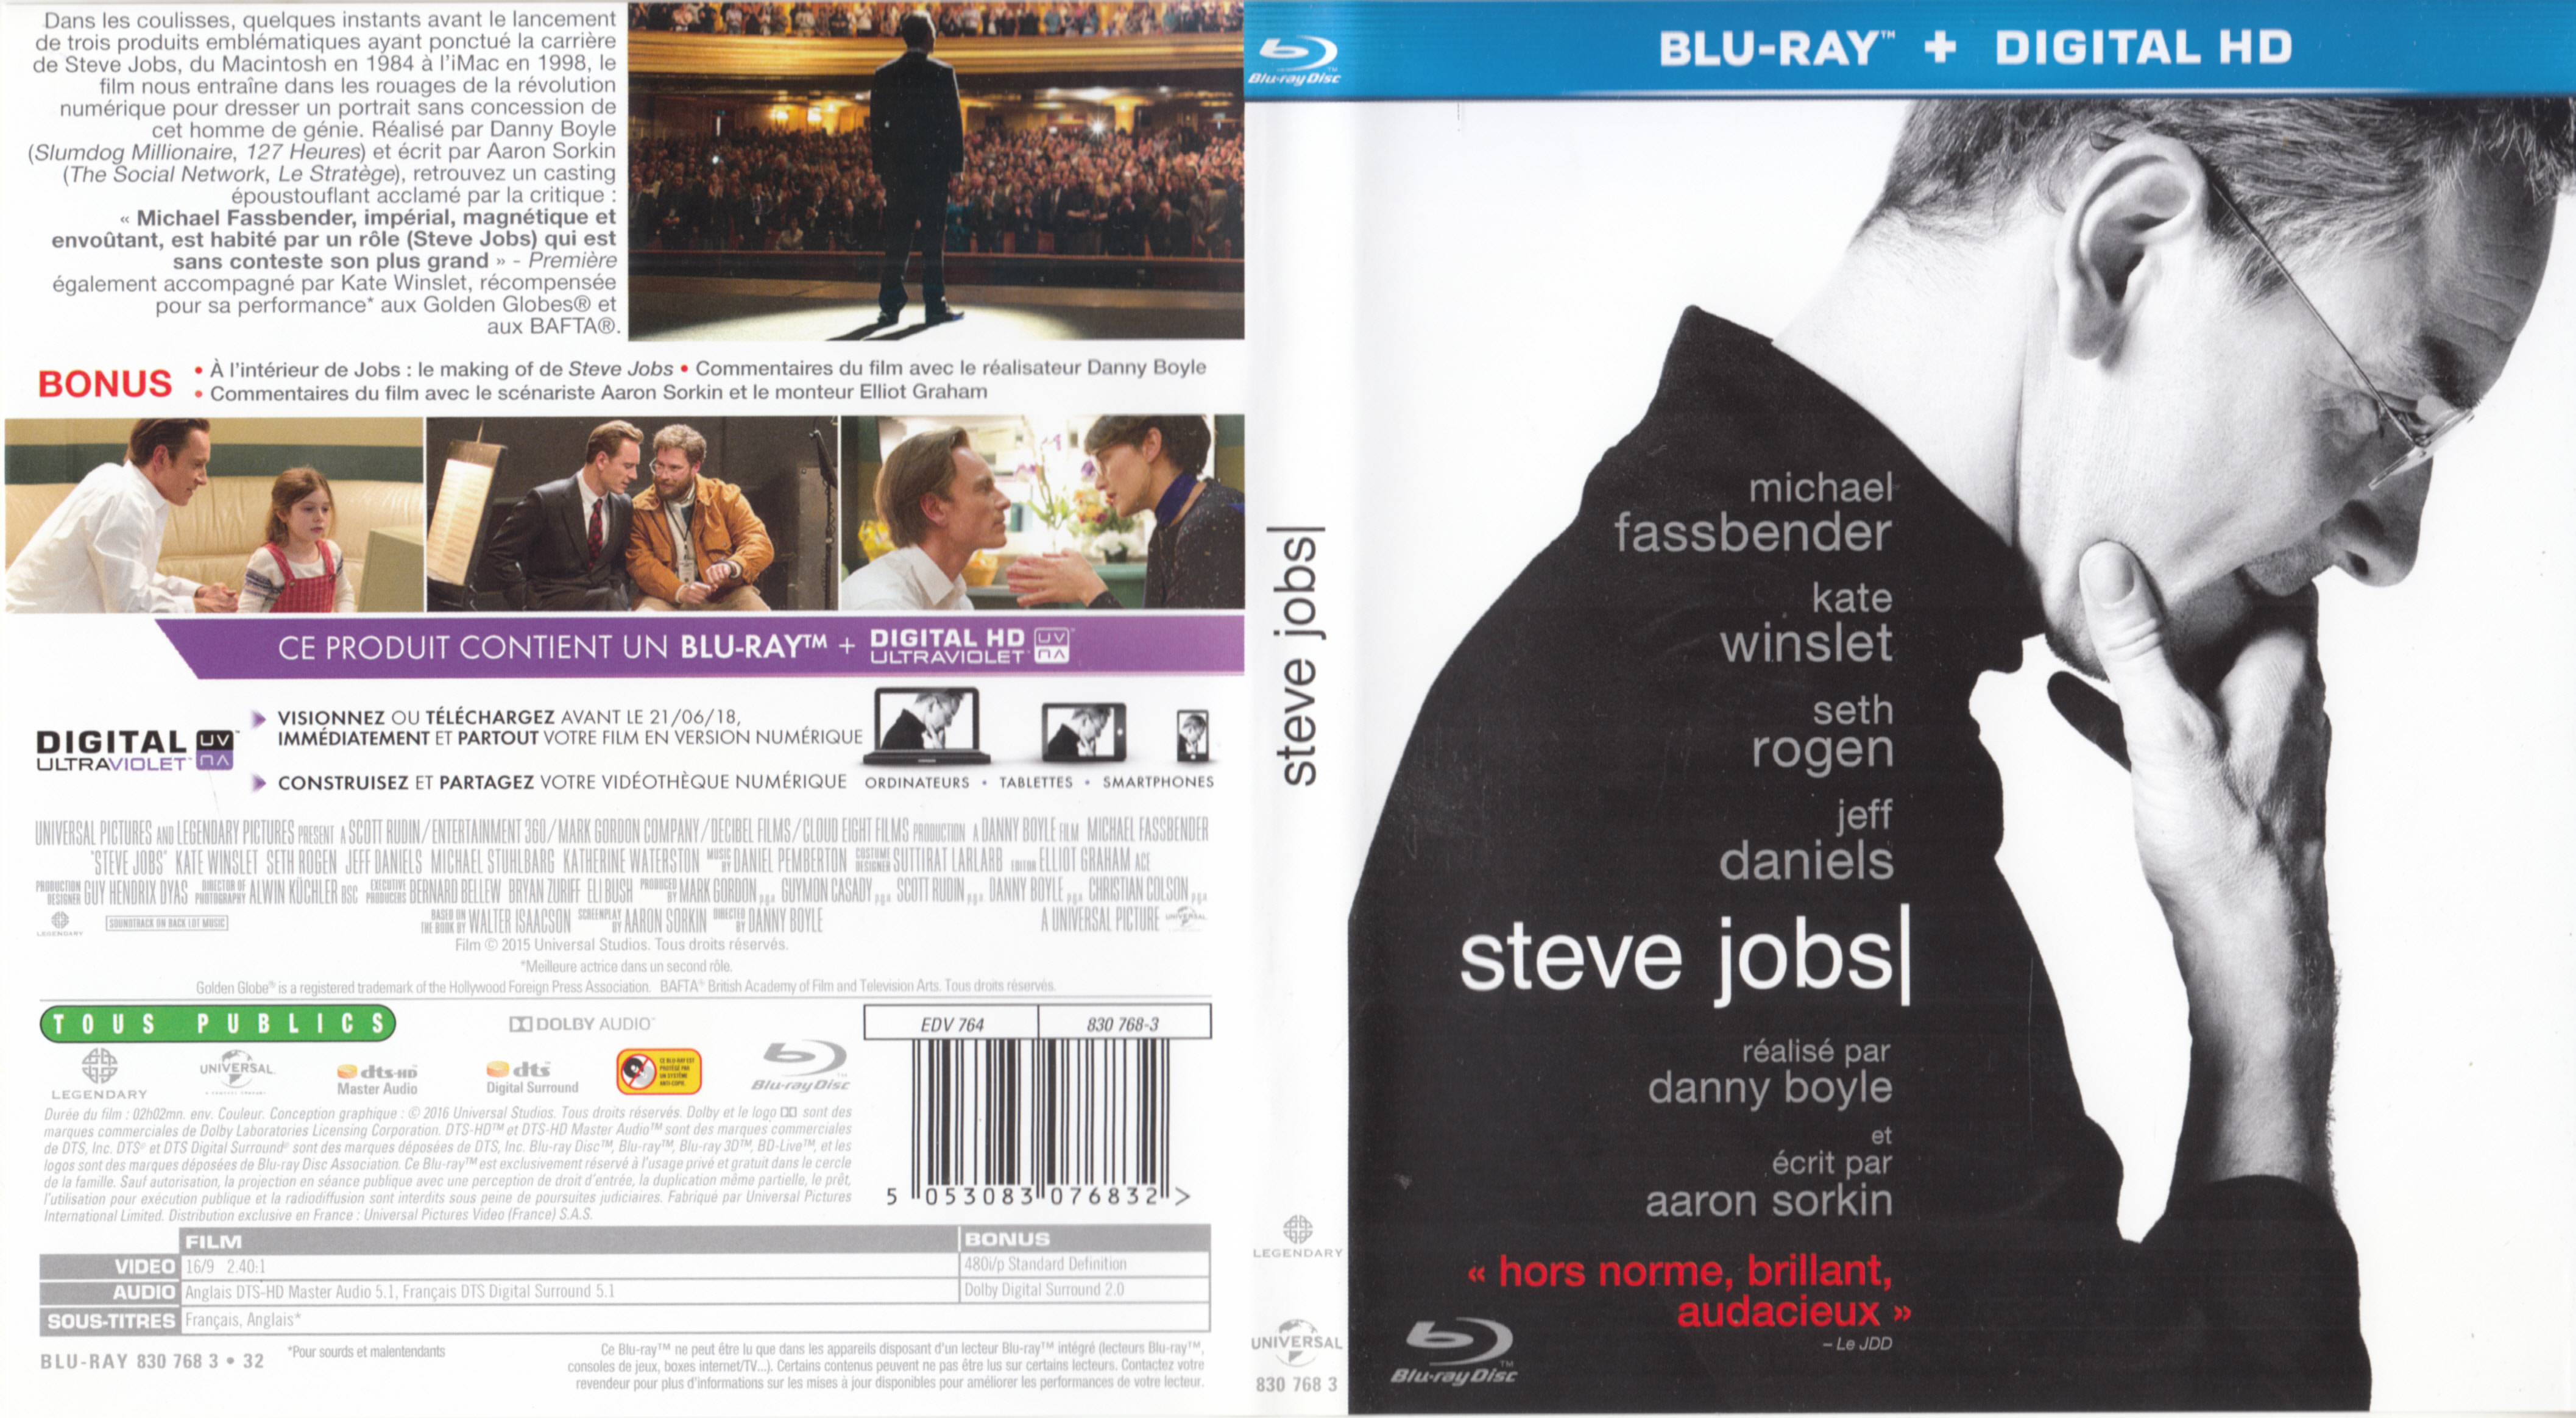 Jaquette DVD Steve Jobs (BLU-RAY)